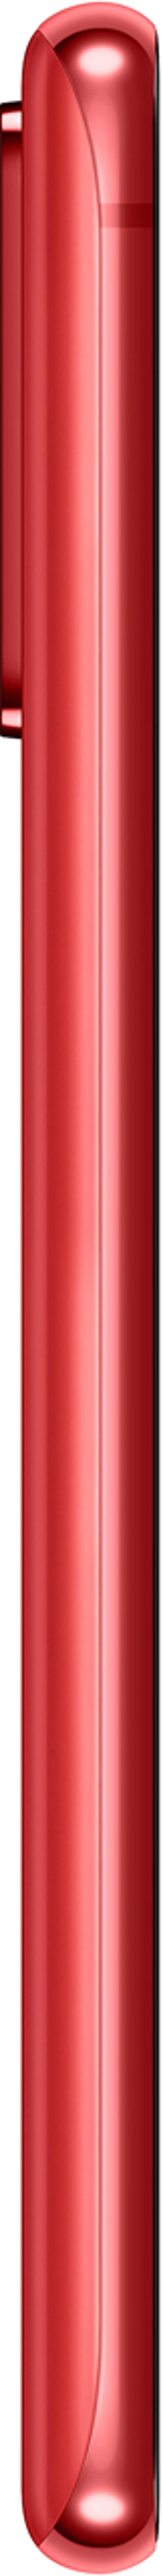 Samsung Galaxy S20 FE 5G 128GB Dobbelt-SIM Rød